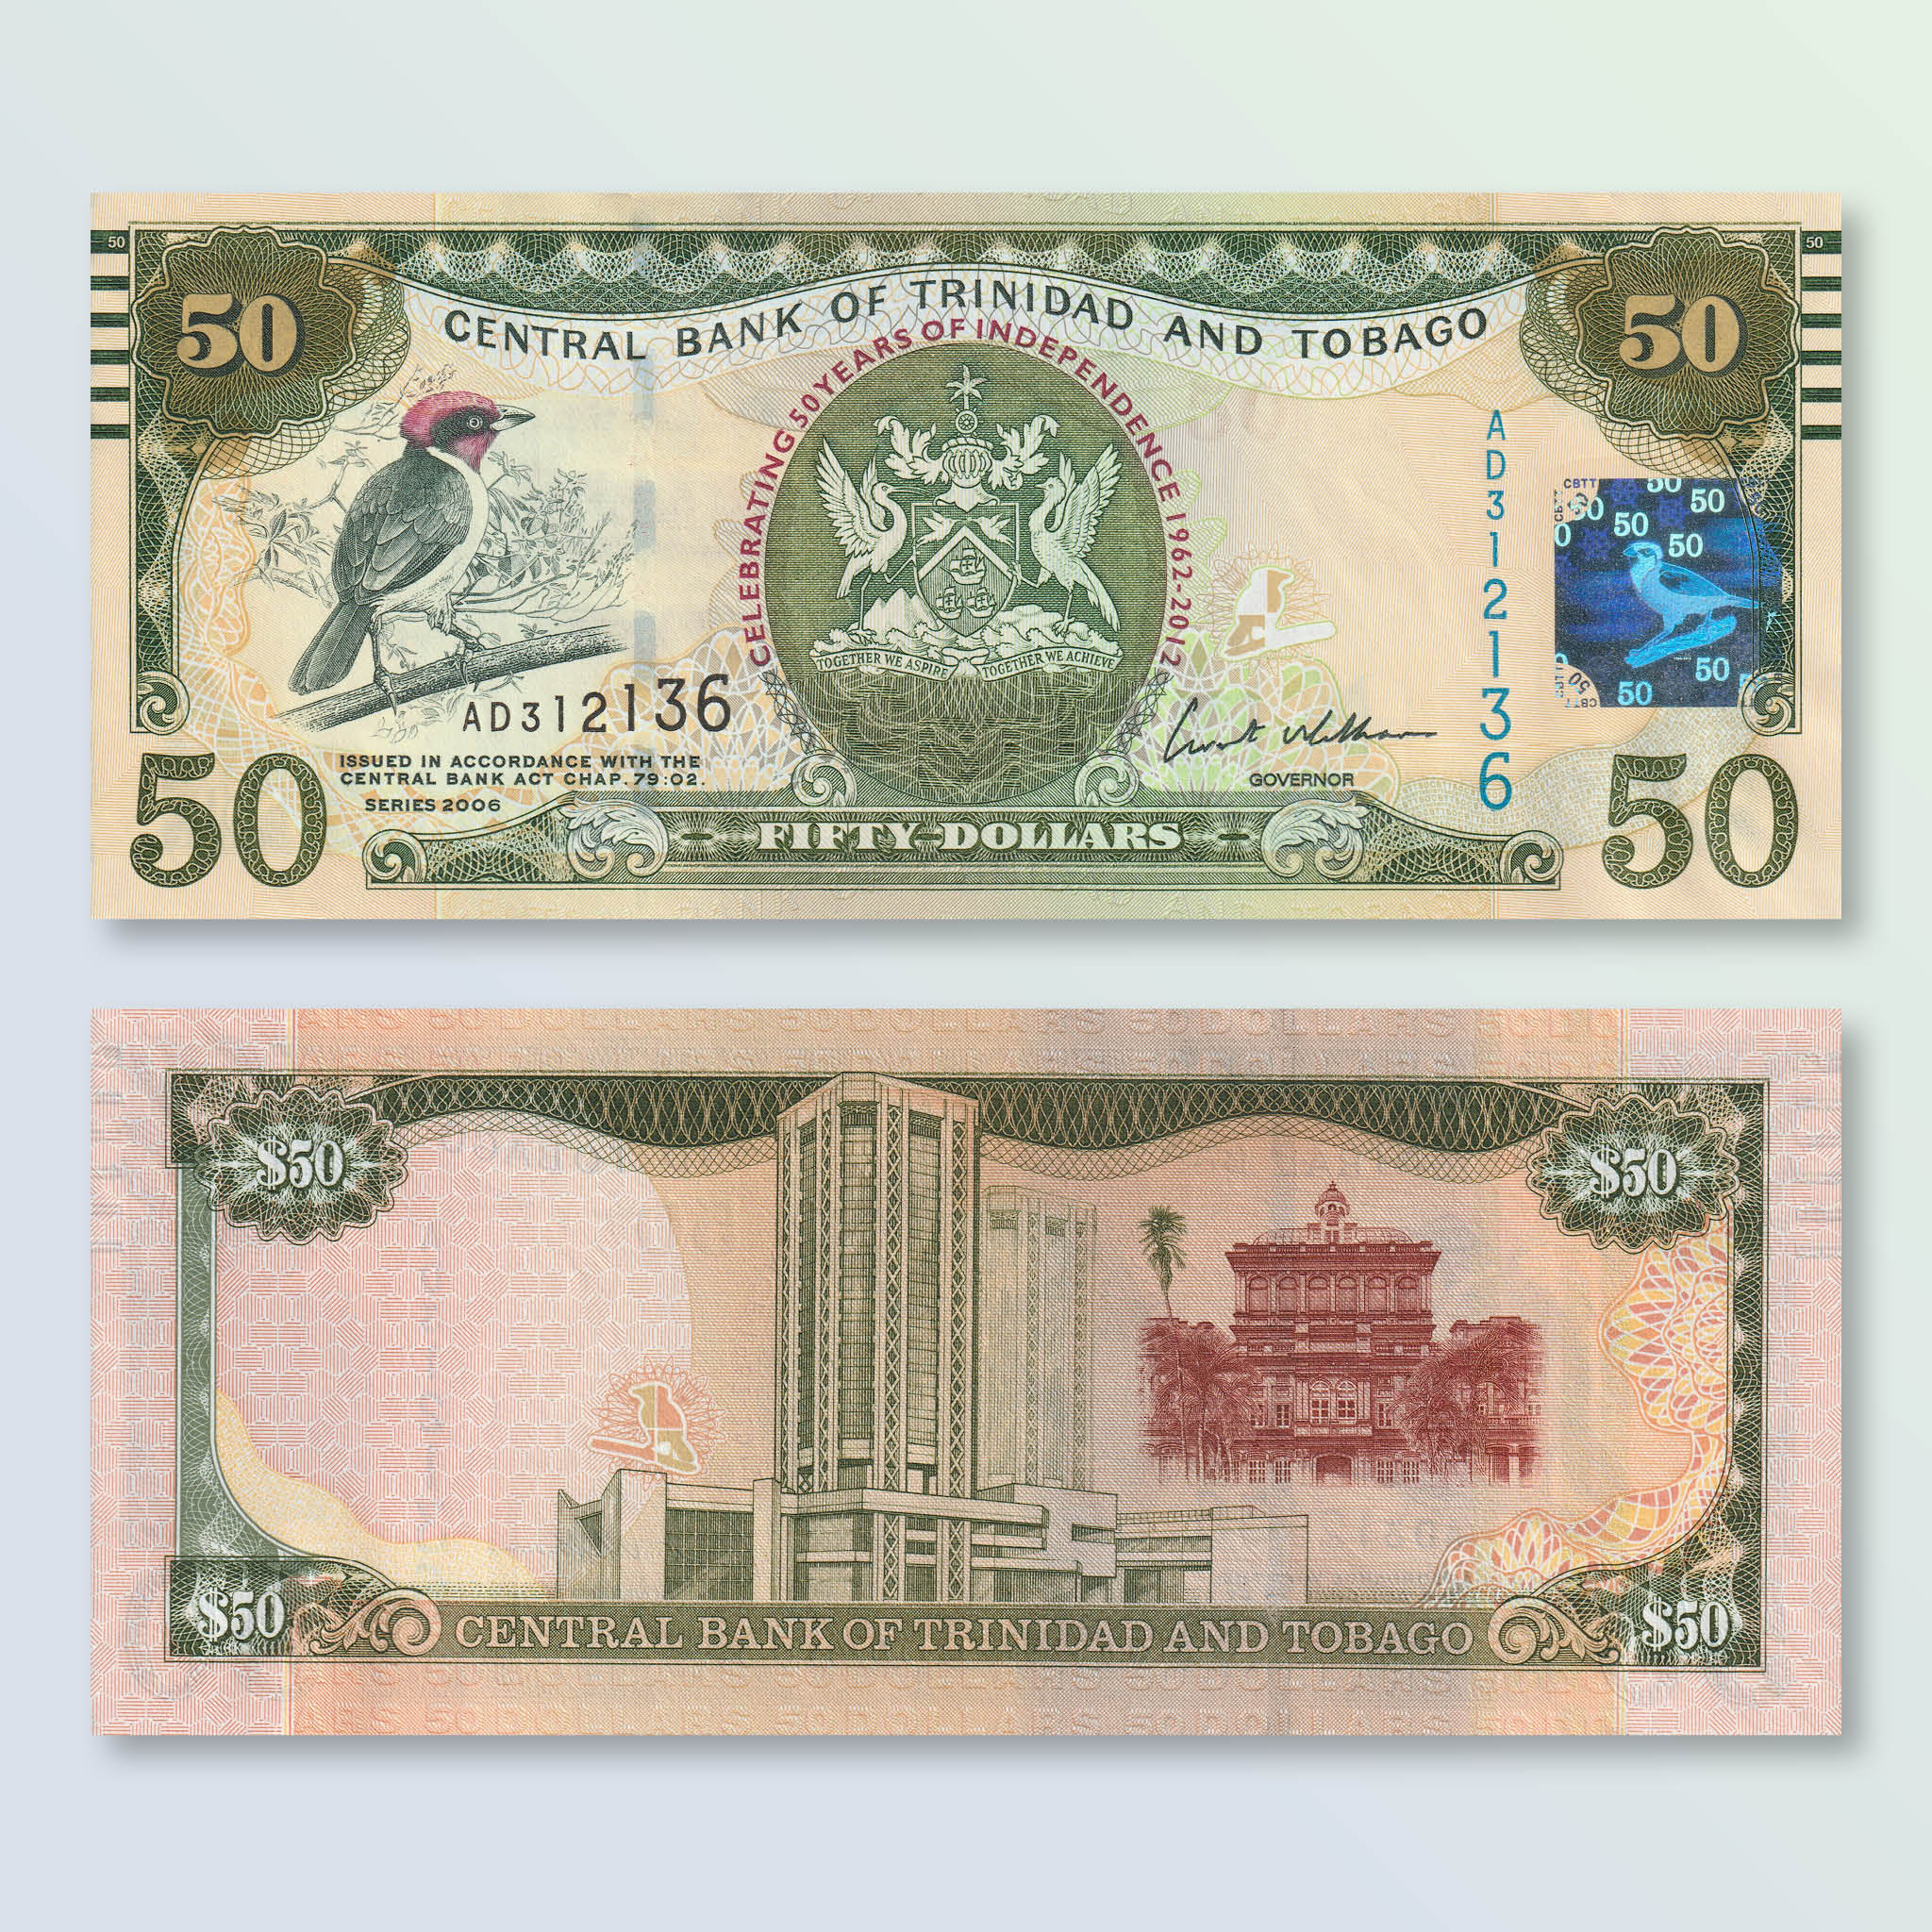 Trinidad & Tobago 50 Dollars, 2006 (2012), B227a, P53, UNC - Robert's World Money - World Banknotes